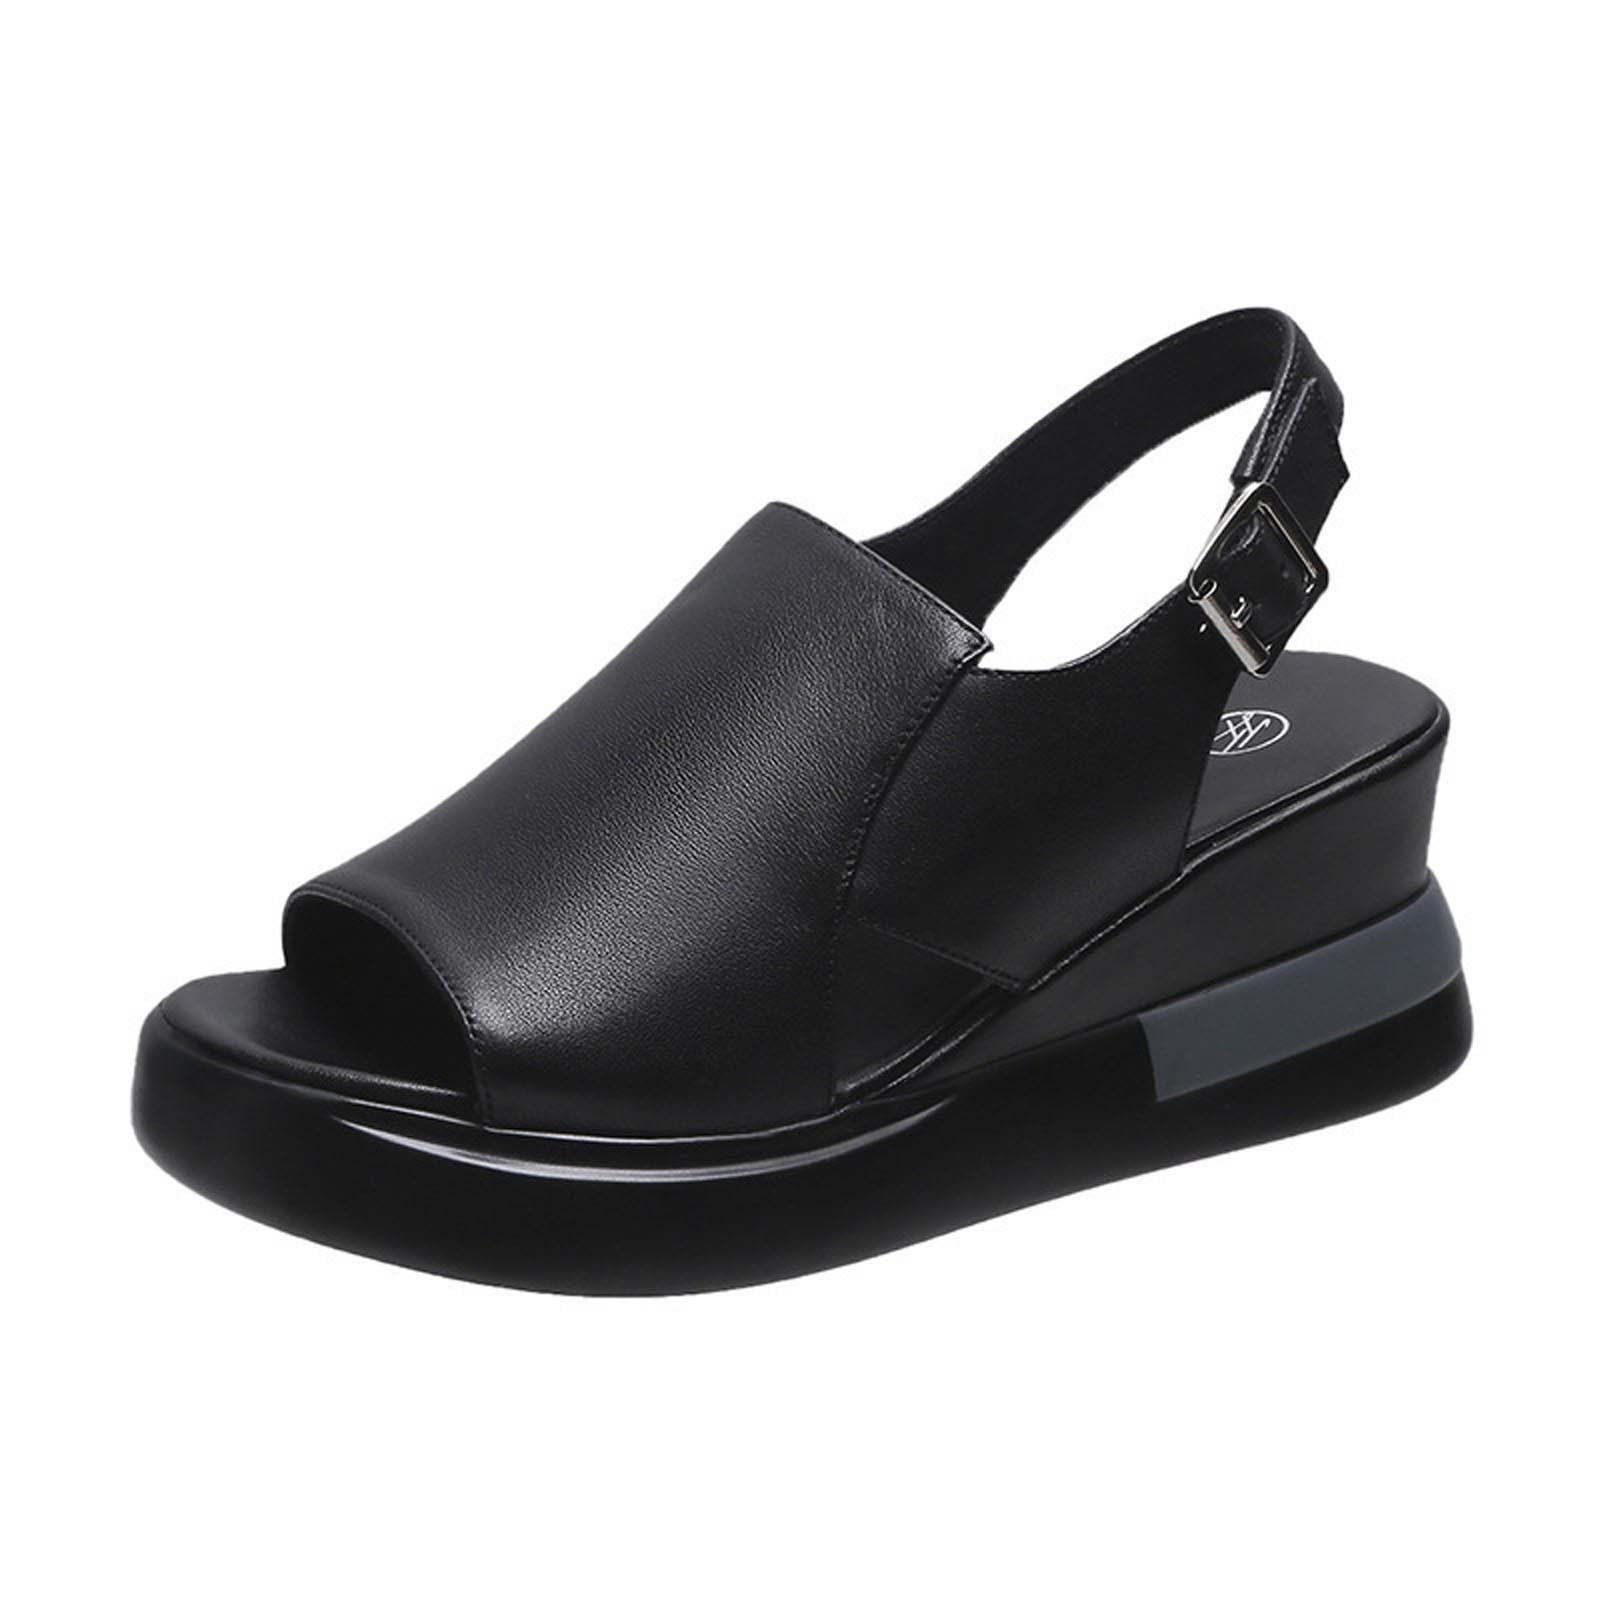 Kiplyki Wholesale Women's Ladies Platform Wedges Heel Sandals